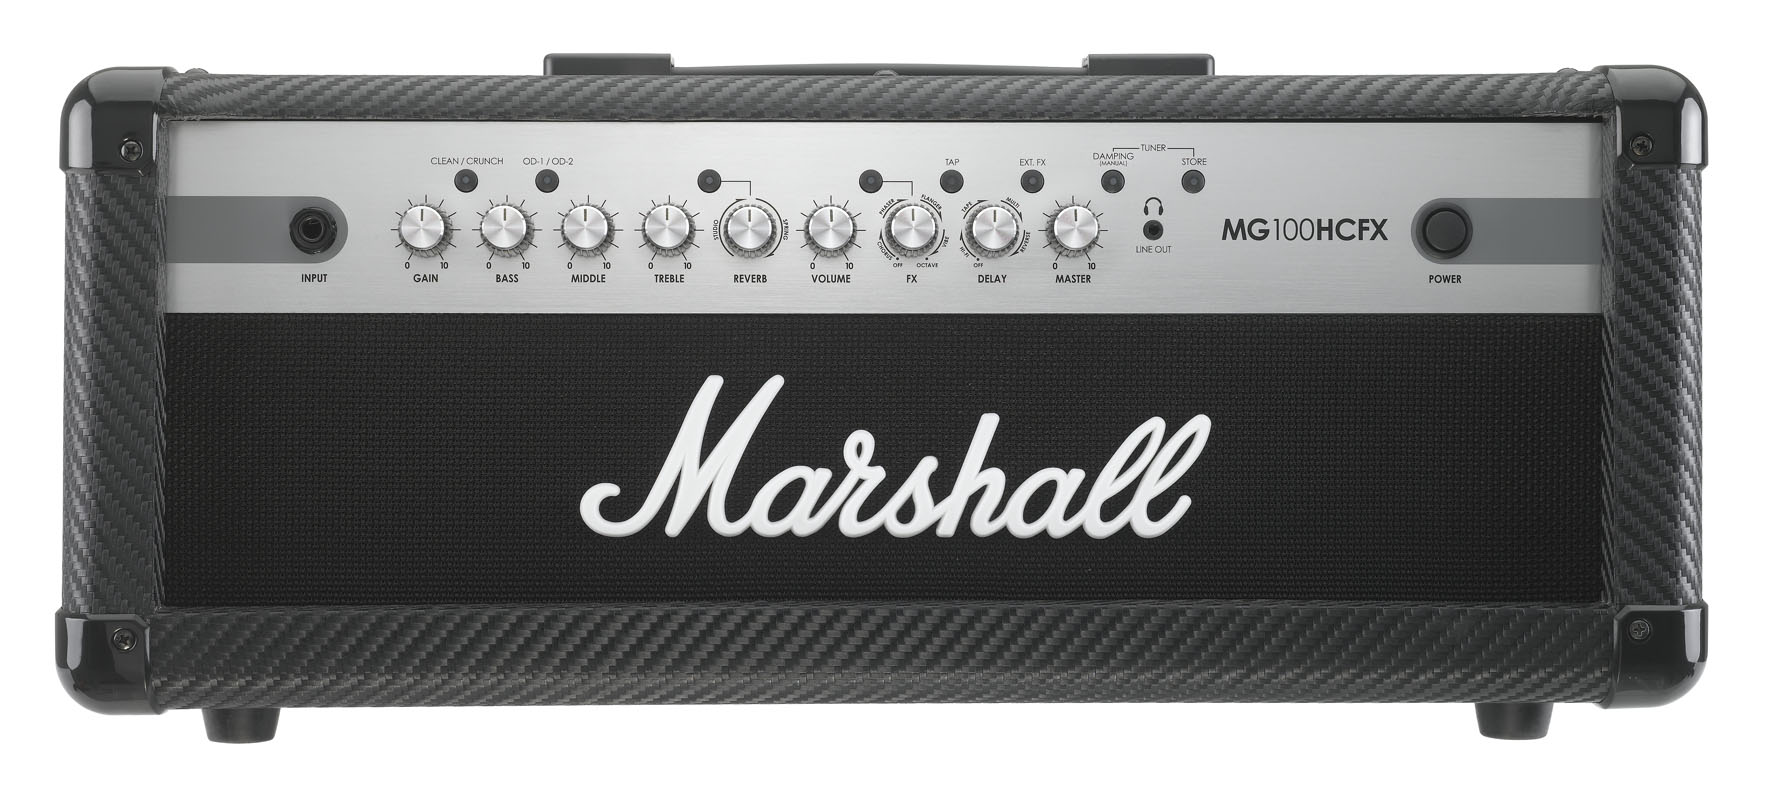 Marshall Marshall MG100HCFX Carbon Fiber Guitar Amplifier Head, 100 Watts